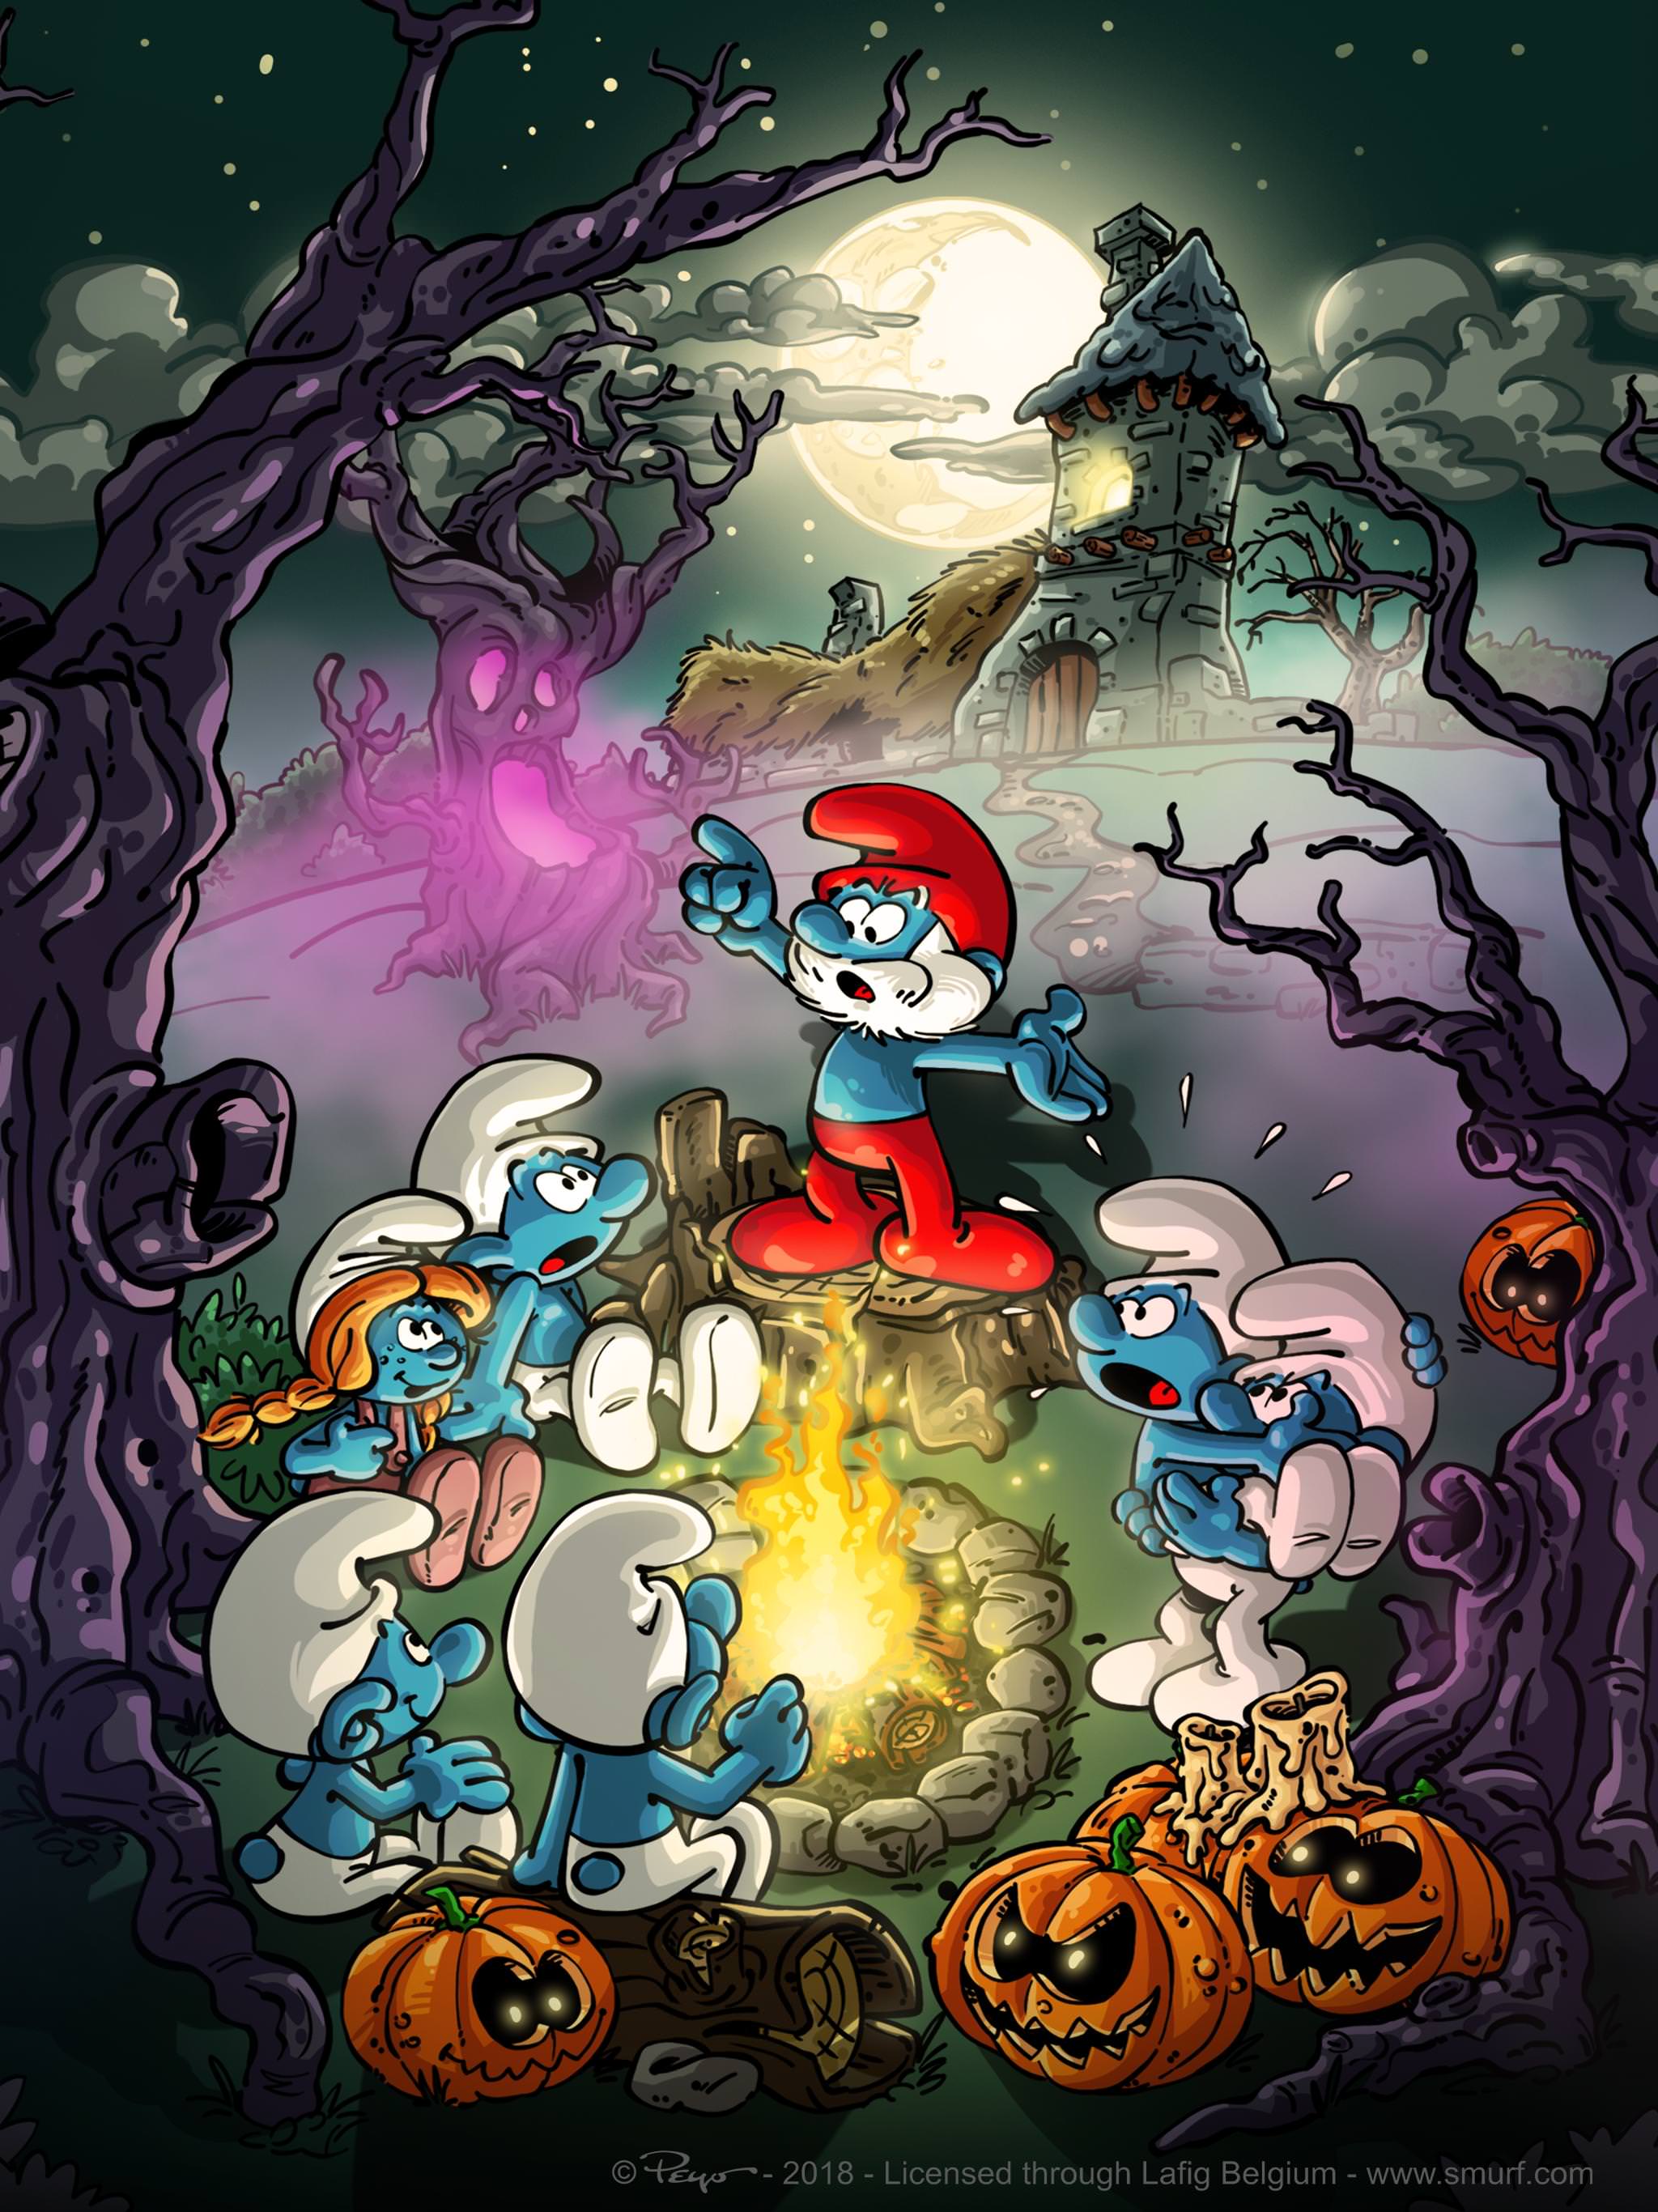 Get Your Original Smurfs Village Halloween Wallpaper Here